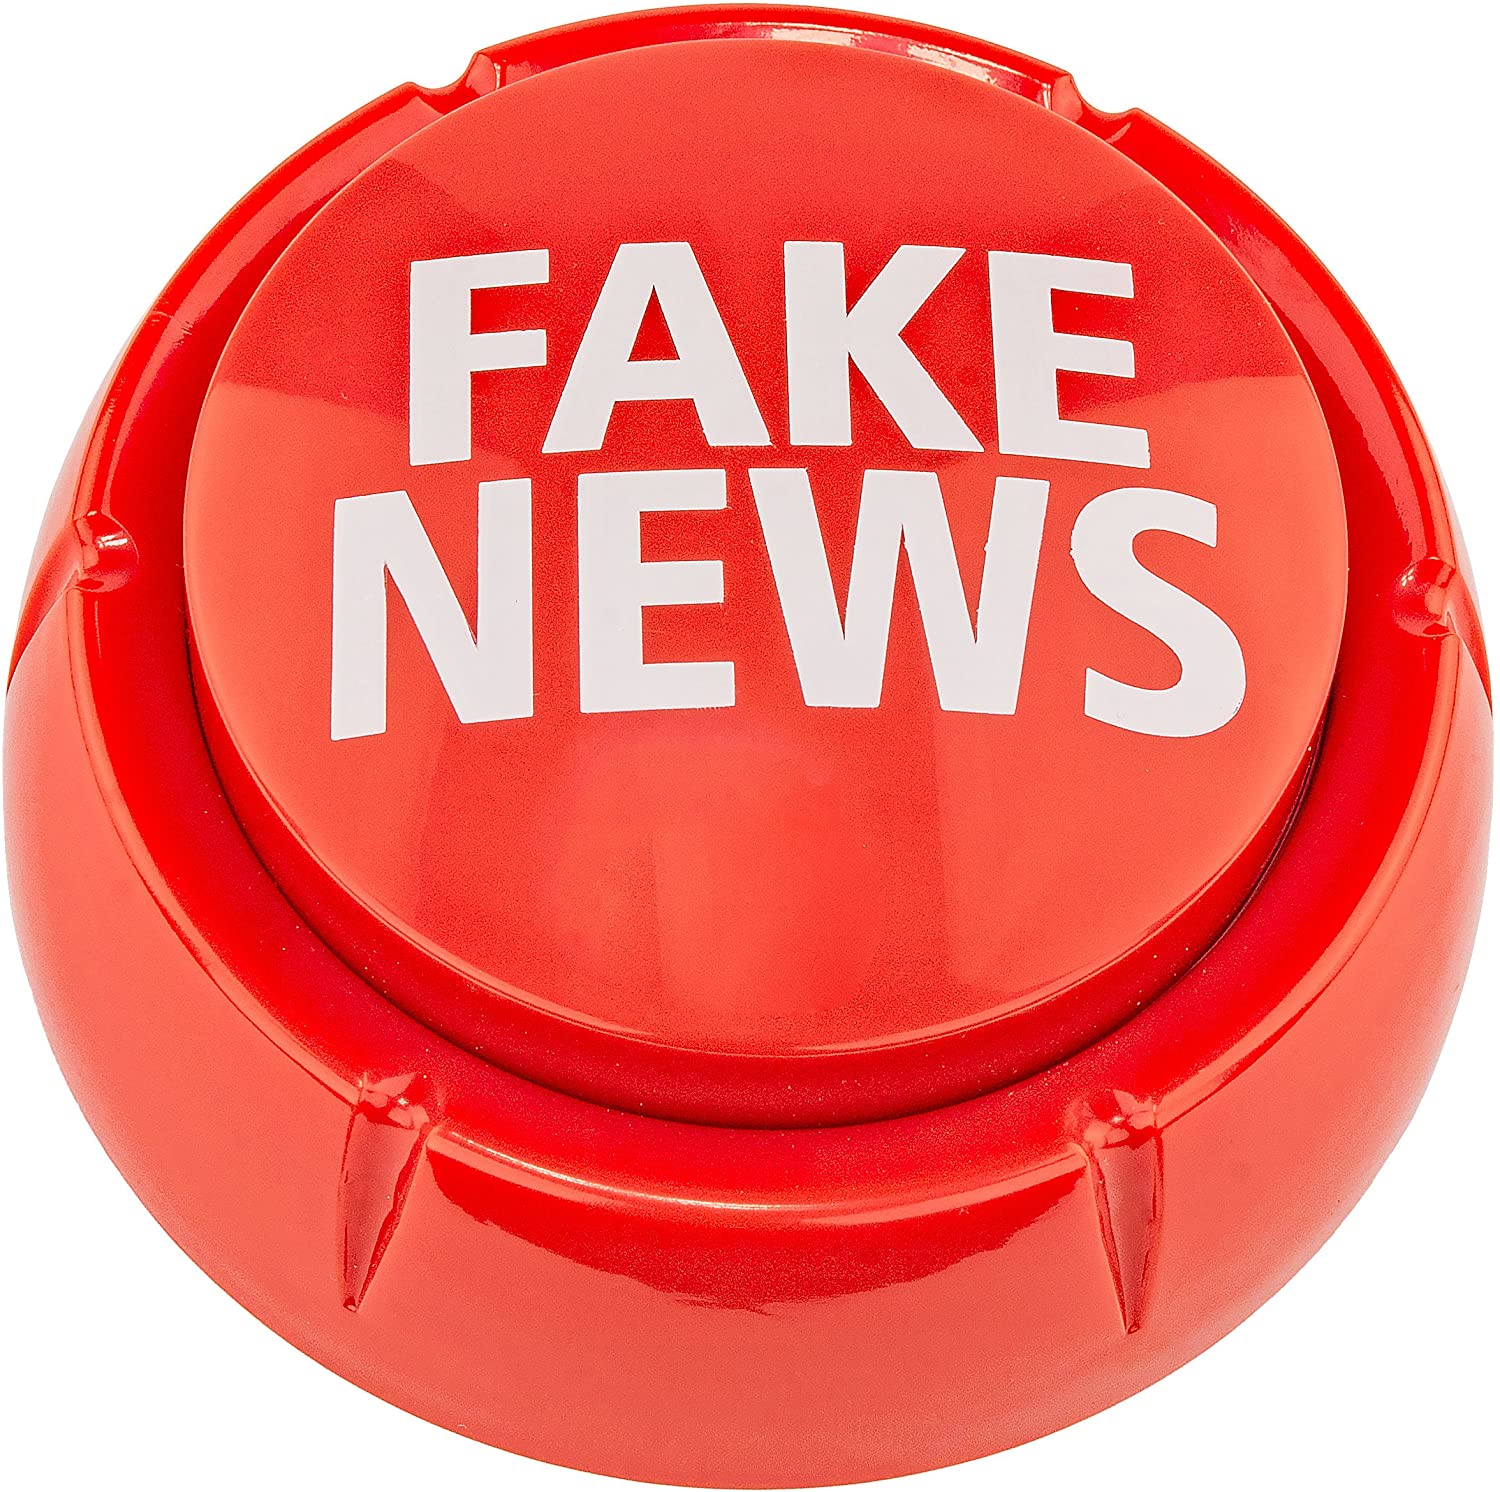 Fairly Odd Novelties Trumpedup Fake News Button